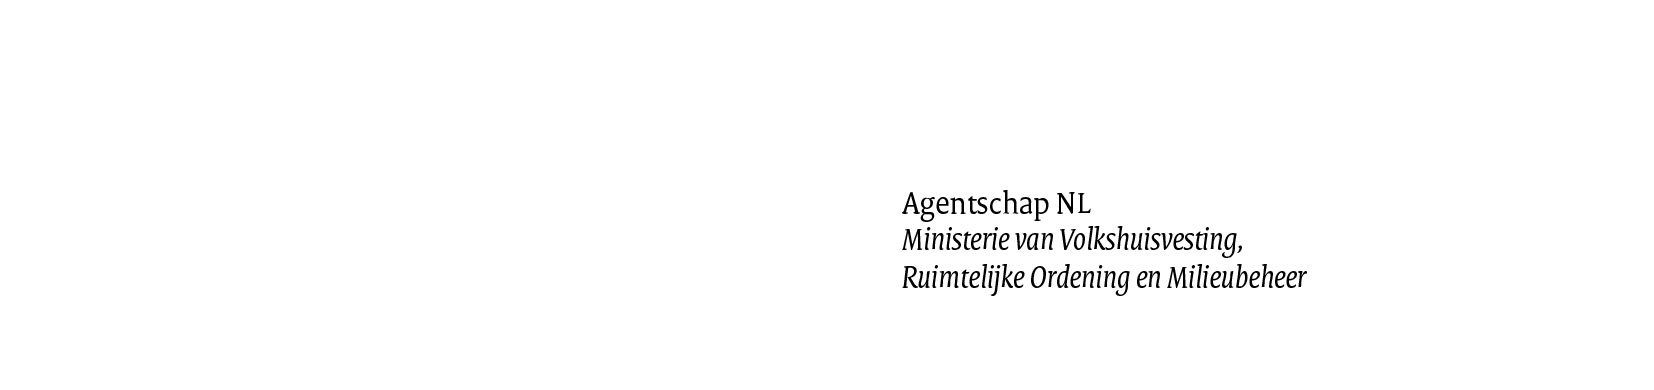 Gebruikershandleiding V-Stacks vergunning Verspreidingsmodel bij de Wet geurhinder en veehouderij Versie 2010.